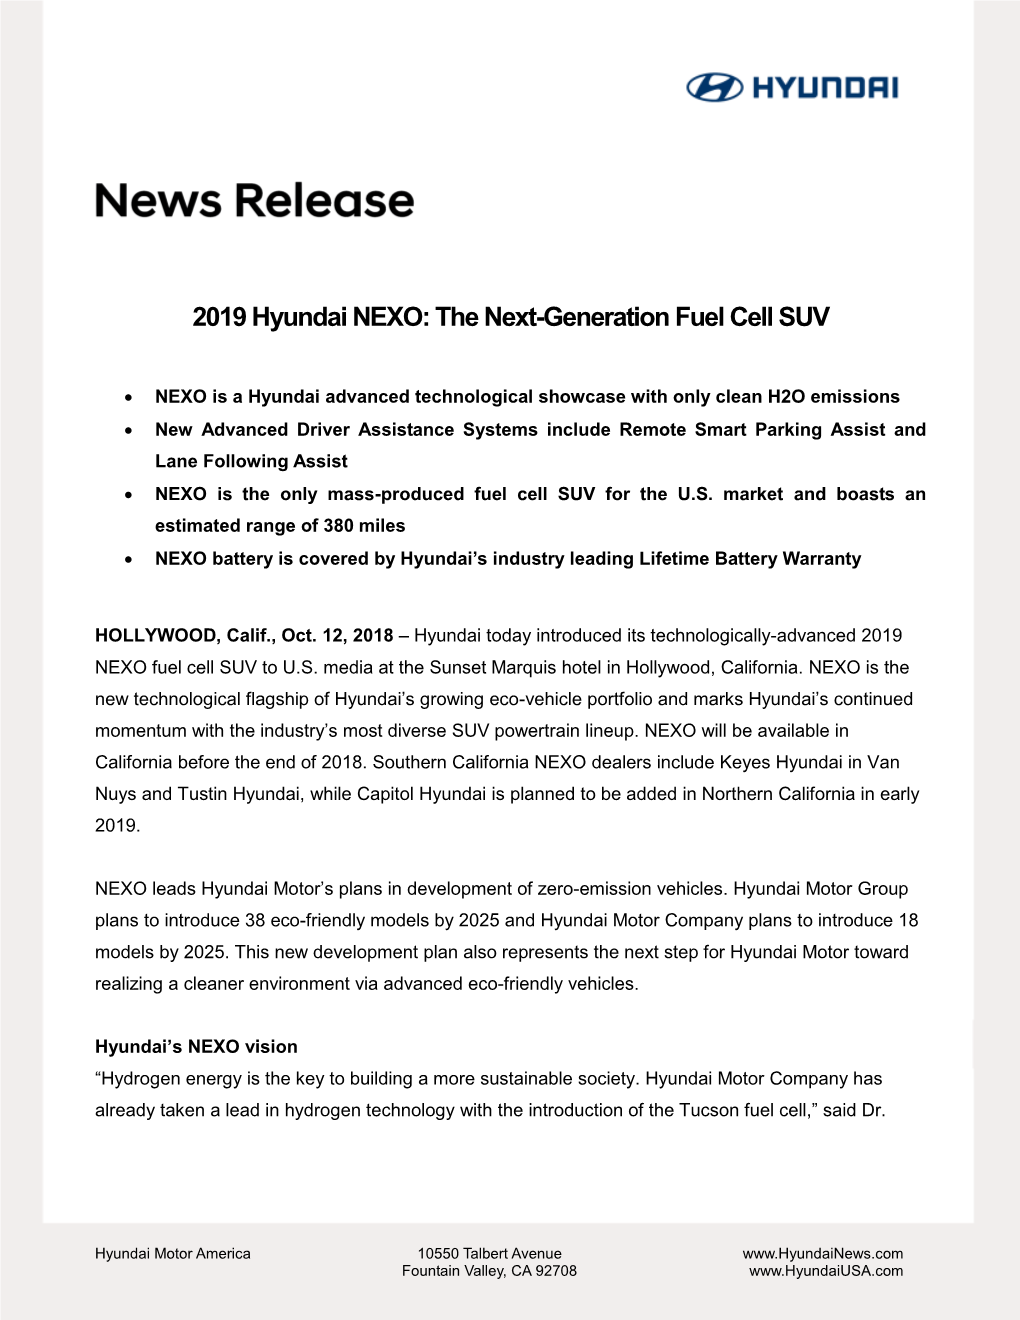 2019 Hyundai NEXO: the Next-Generation Fuel Cell SUV